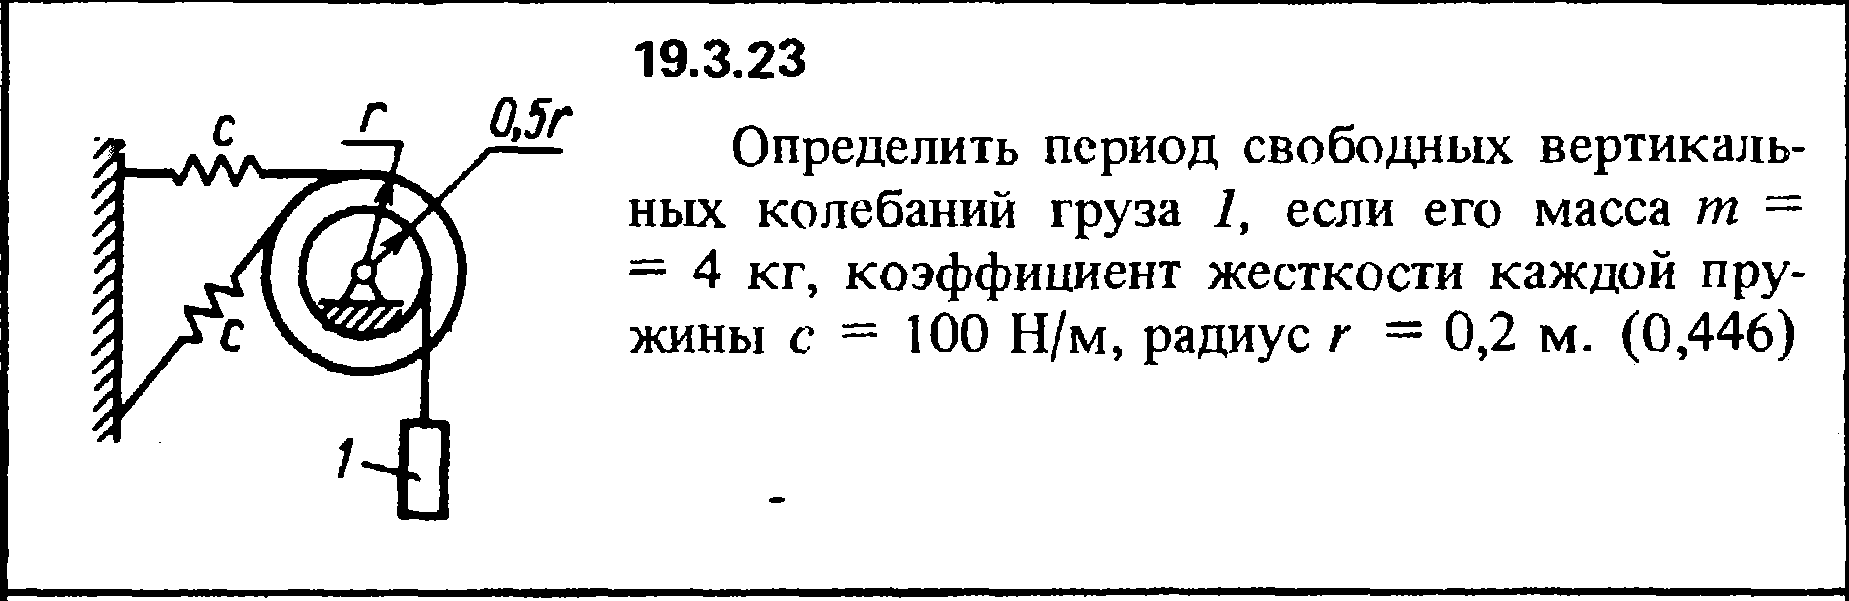 Решение 19.3.23 из сборника (решебника) Кепе О.Е. 1989